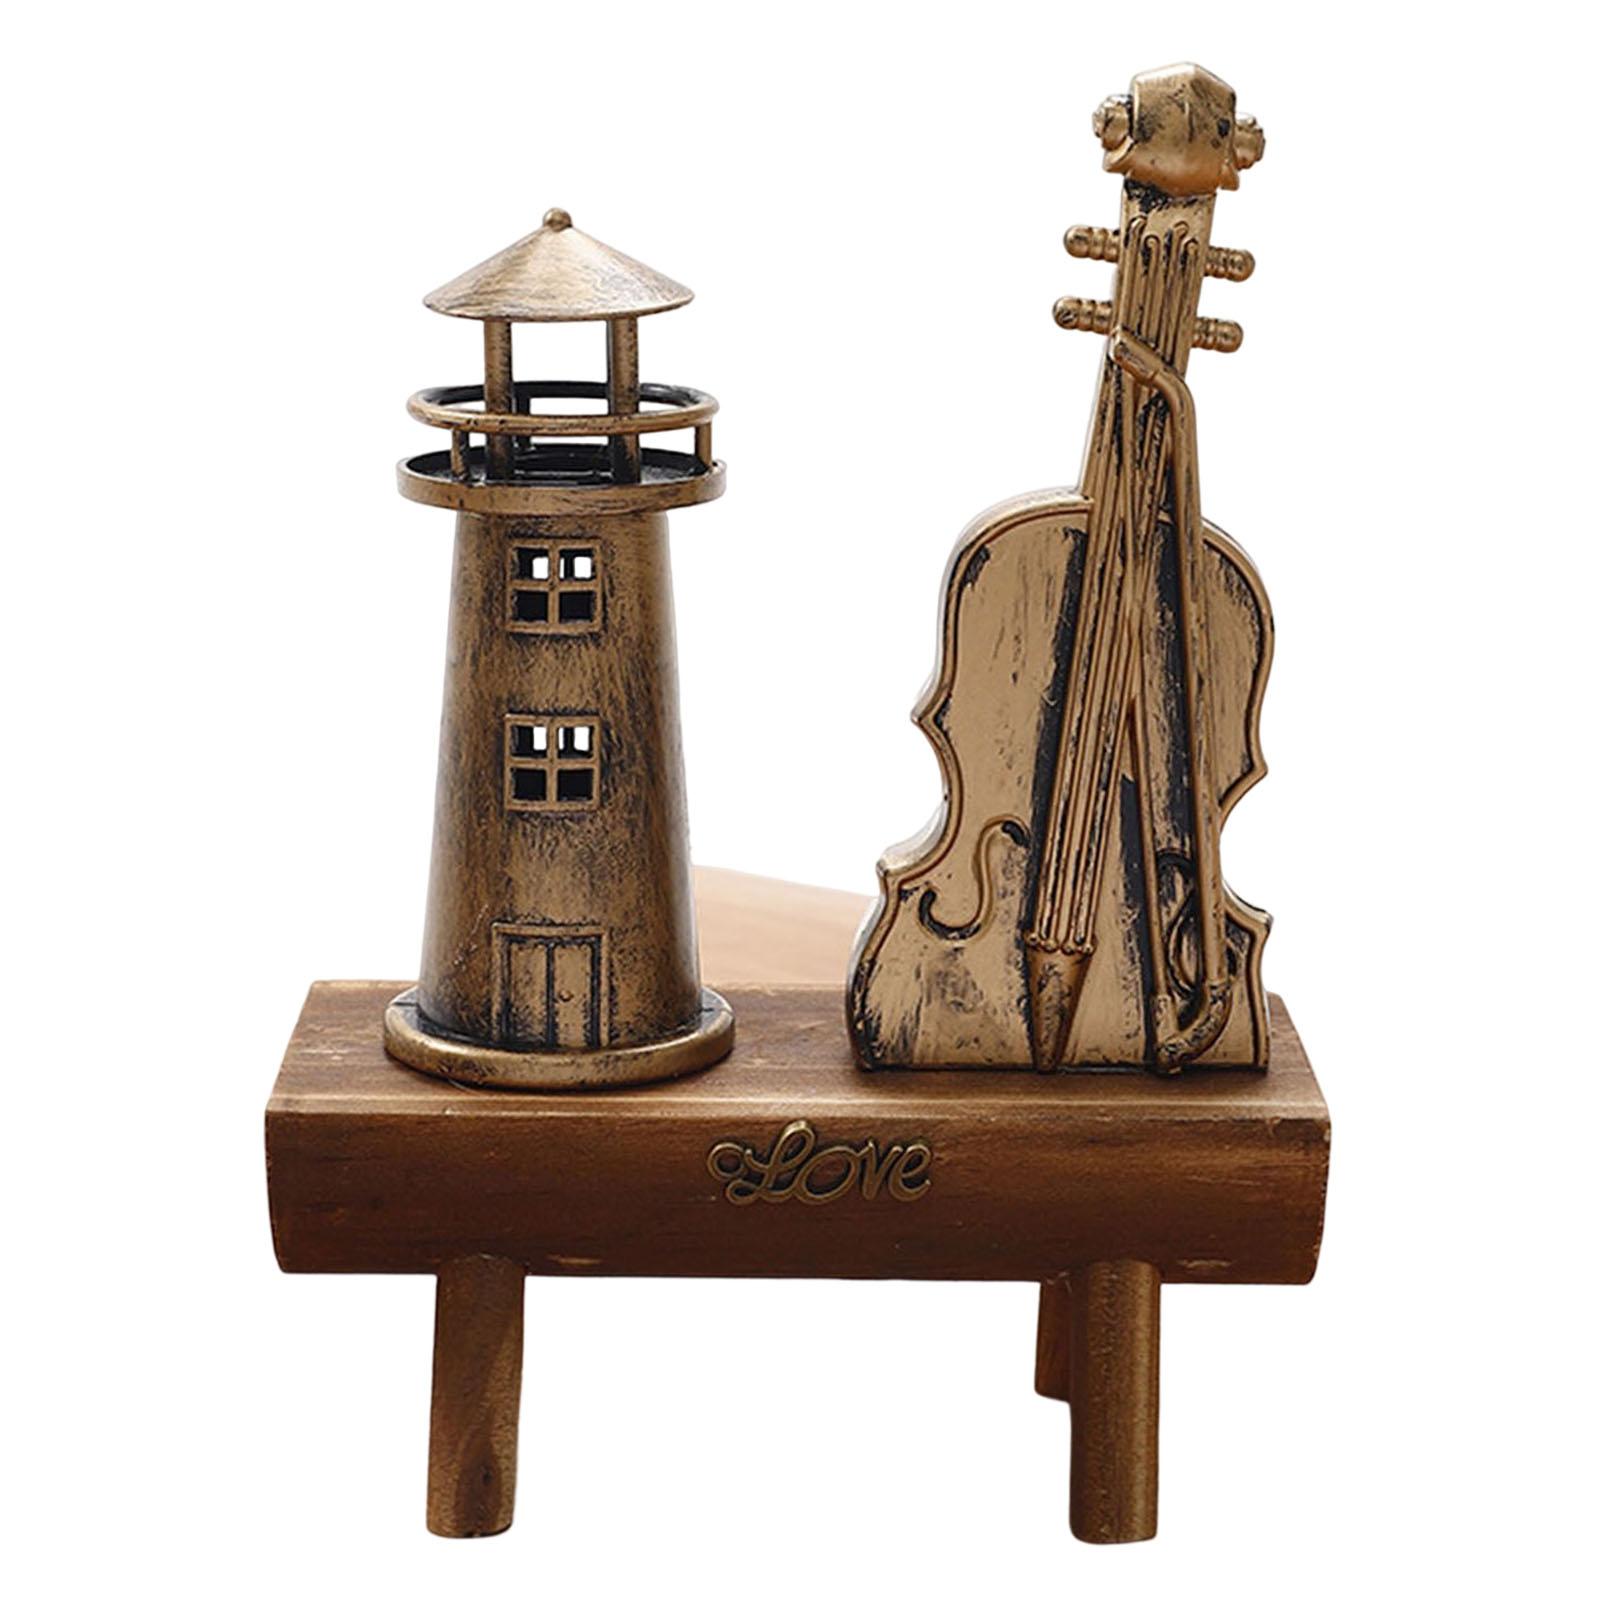 Miniature Wooden Model Crafts Ornament Kids Gift for Desktop Home Decor Lighthouse